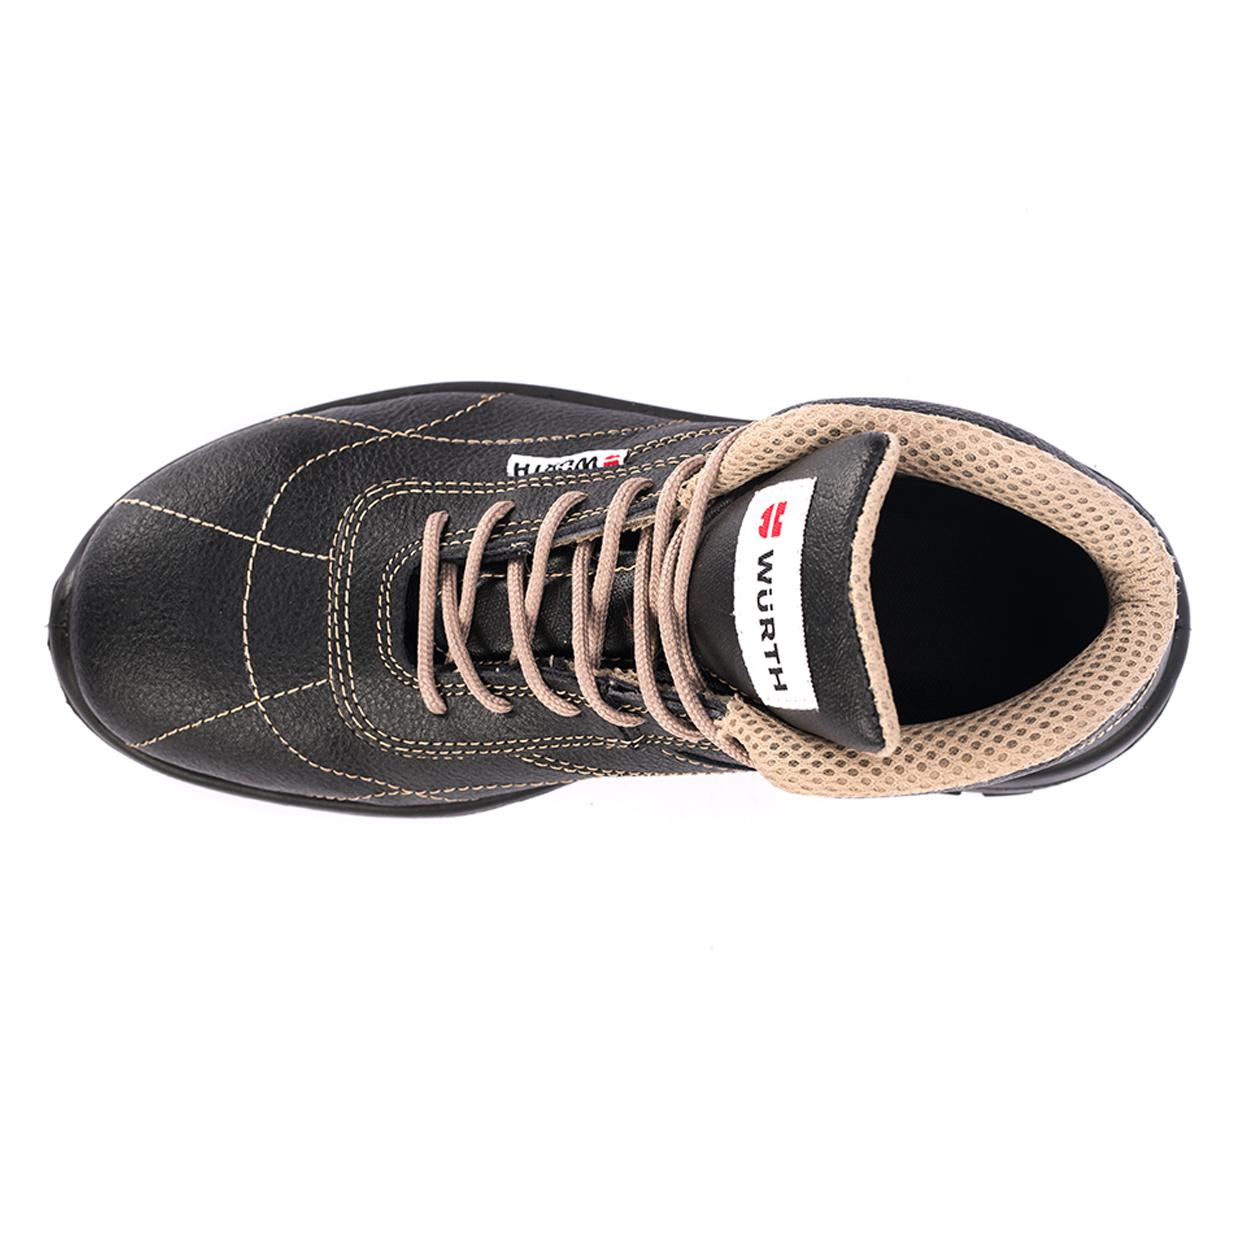 Selected image for WÜRTH Bezbednosne duboke cipele Siena S3 braon